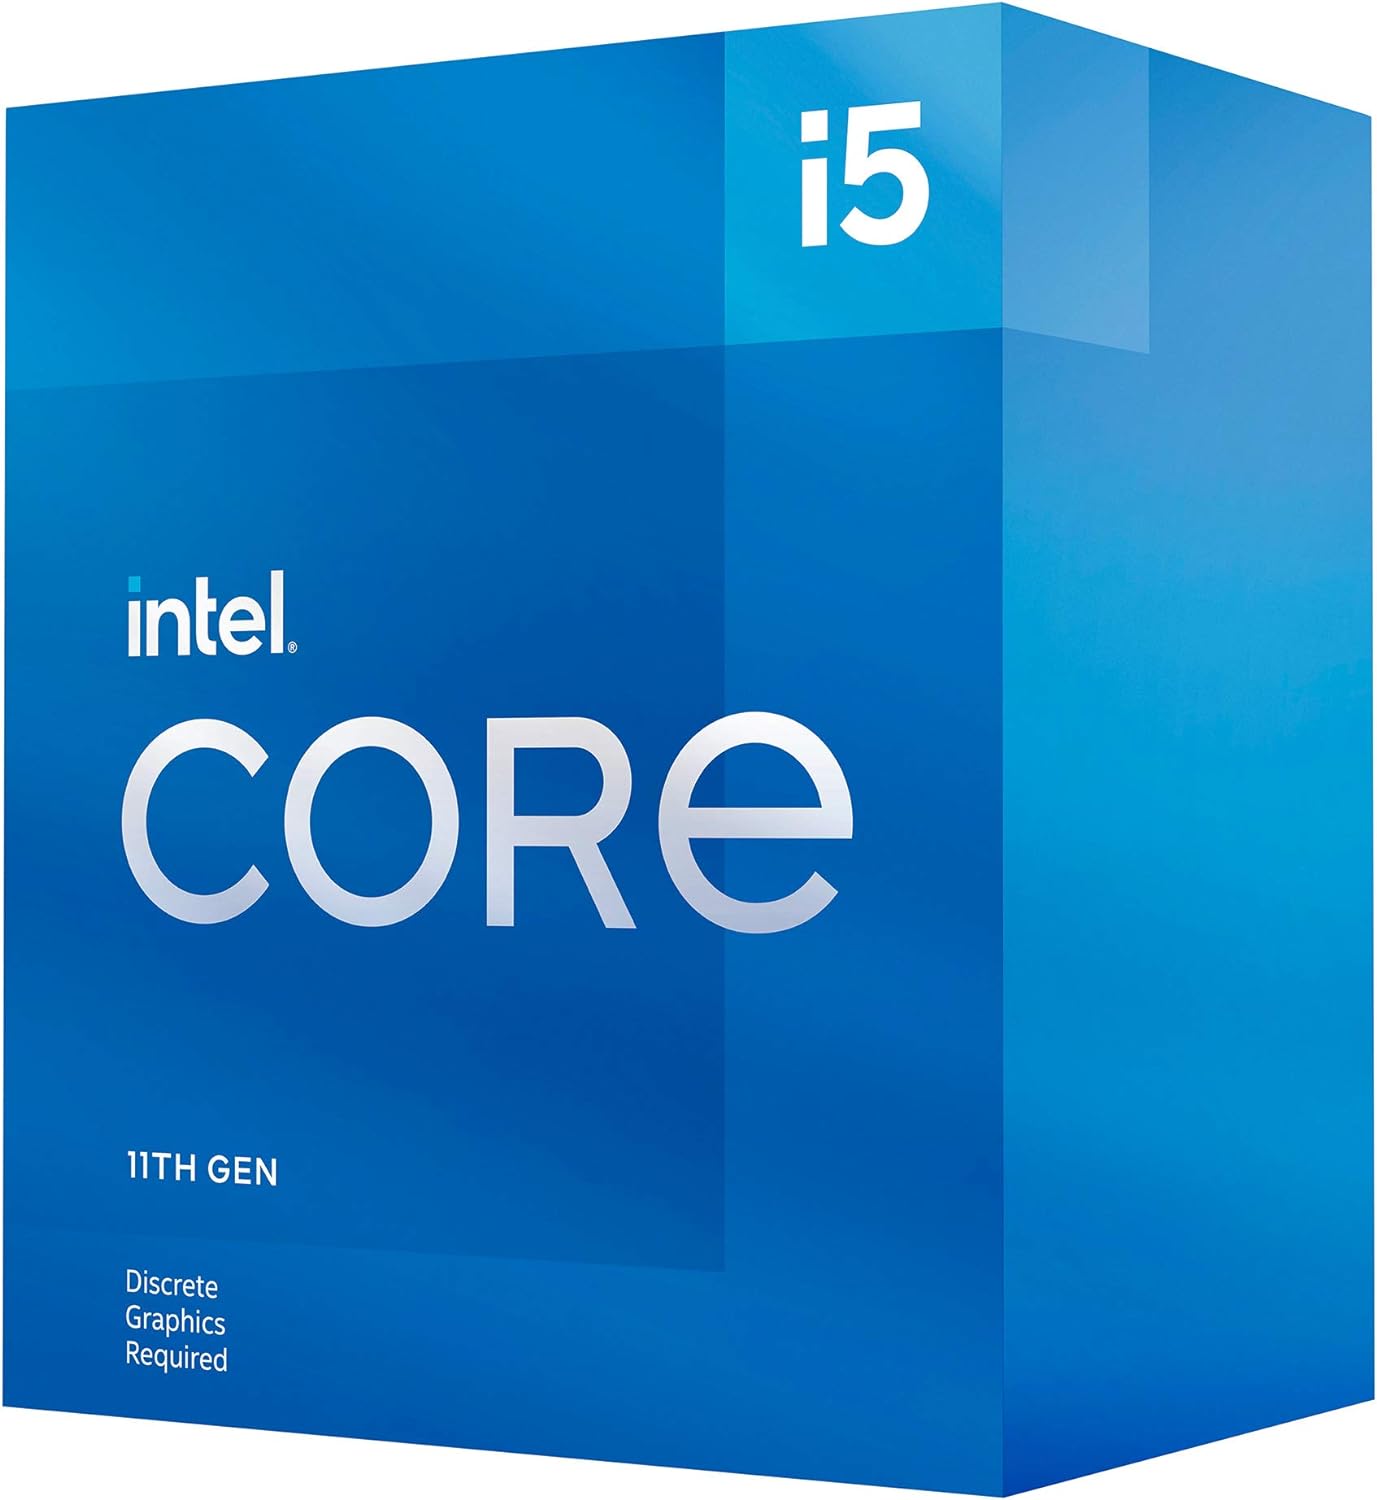 Intel Core i5-11400F | 6 Cores 12 Threads CPU